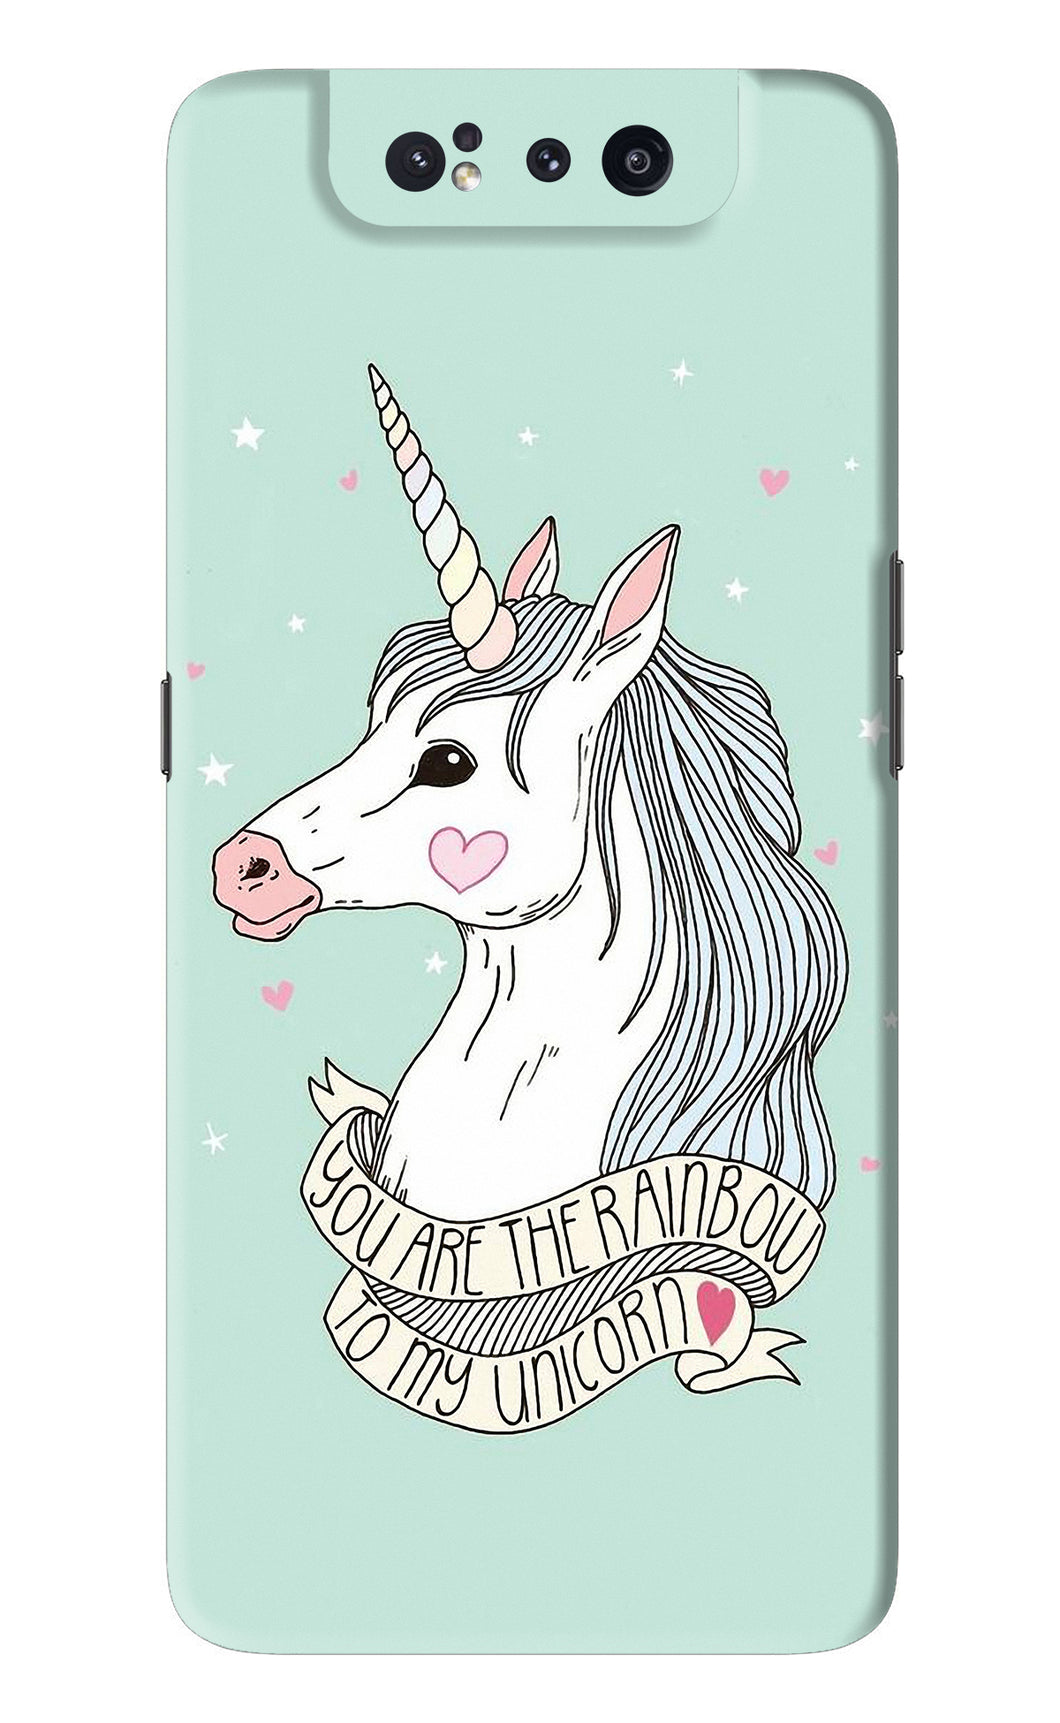 Unicorn Wallpaper Samsung Galaxy A80 Back Skin Wrap